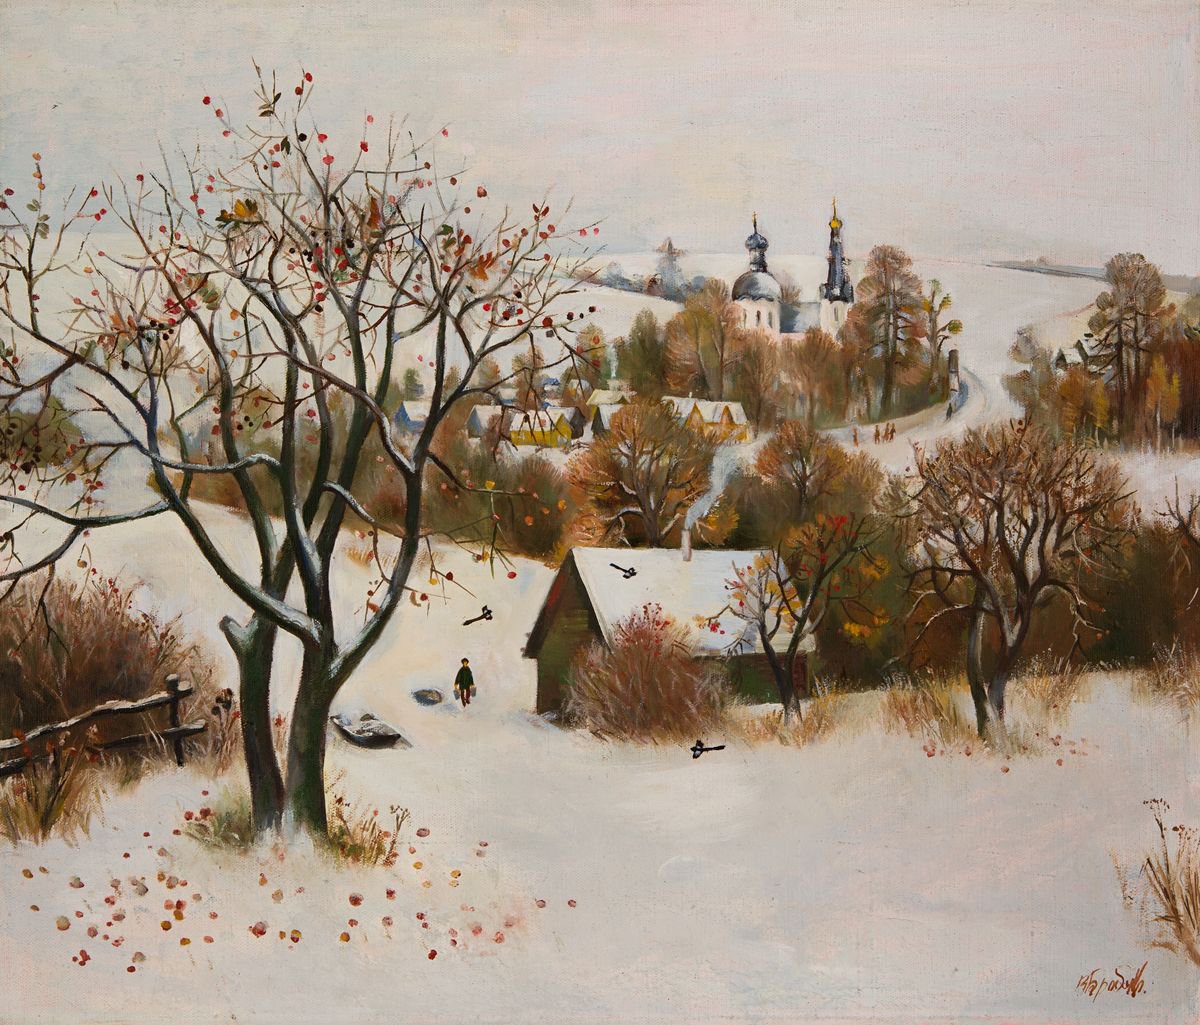 Winter Day by Viktar Barabantsau